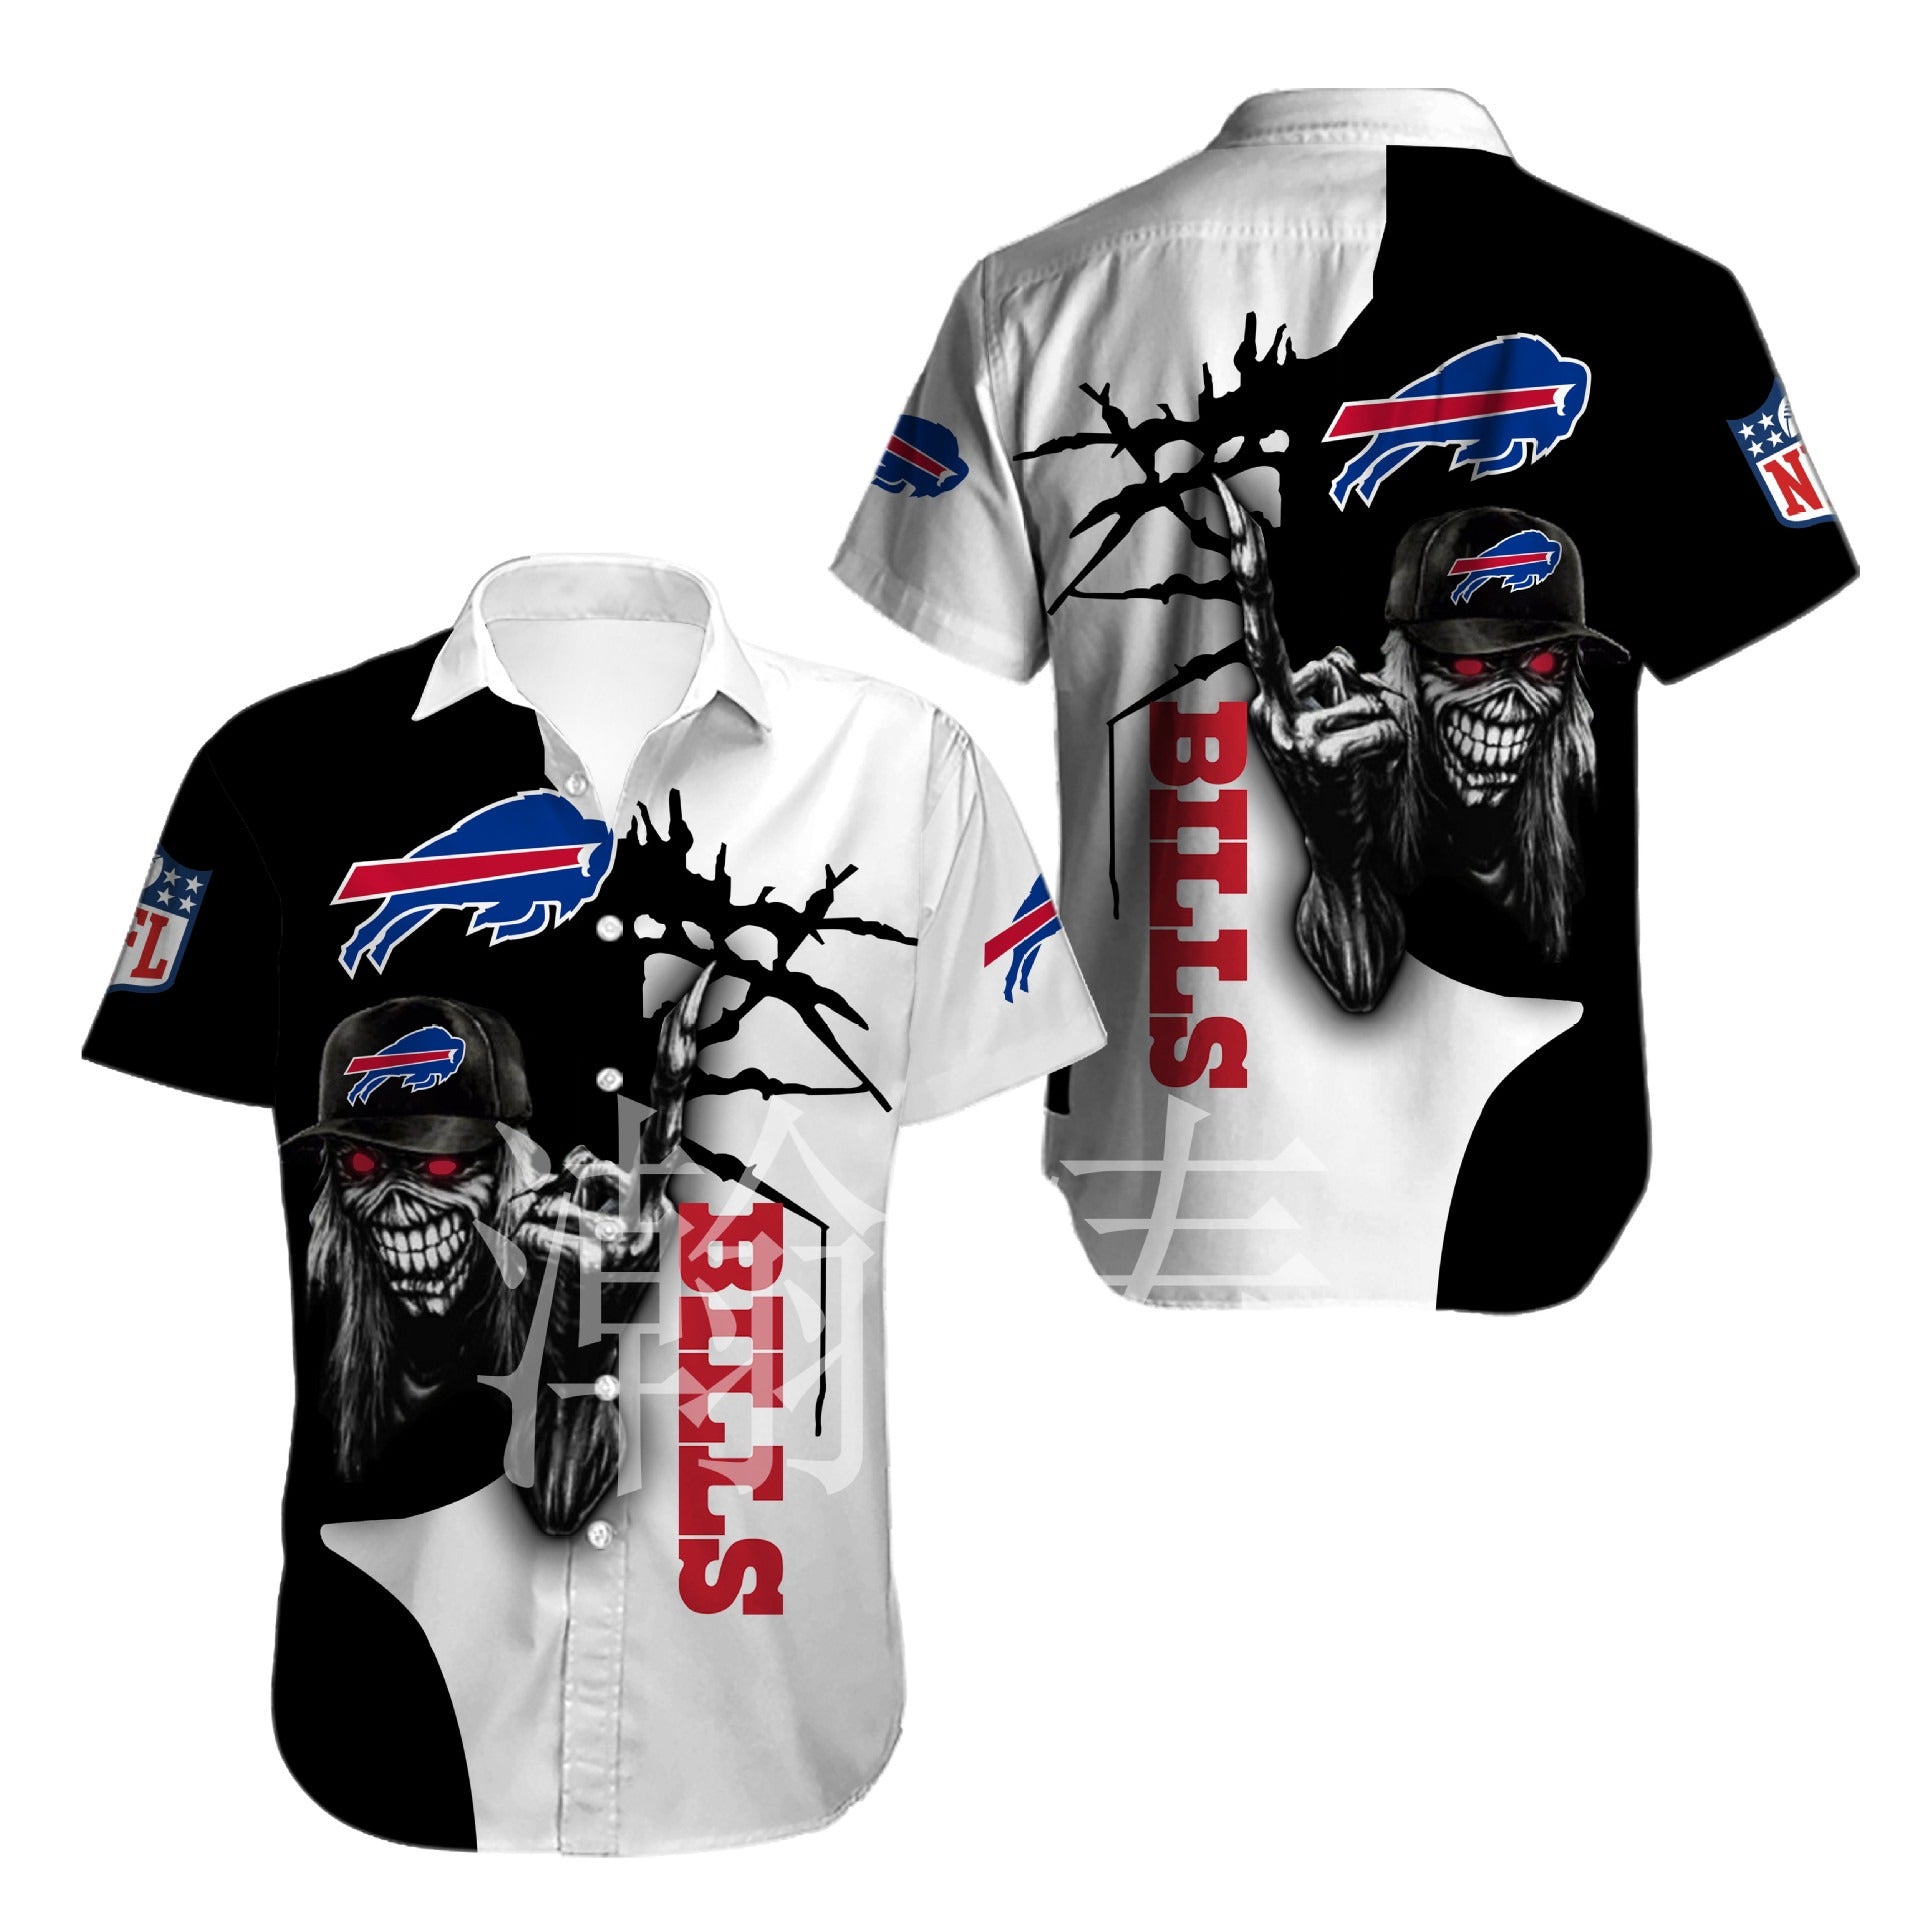 Iron-Maiden-Buffalo-Bills-Shirts-Button-Up